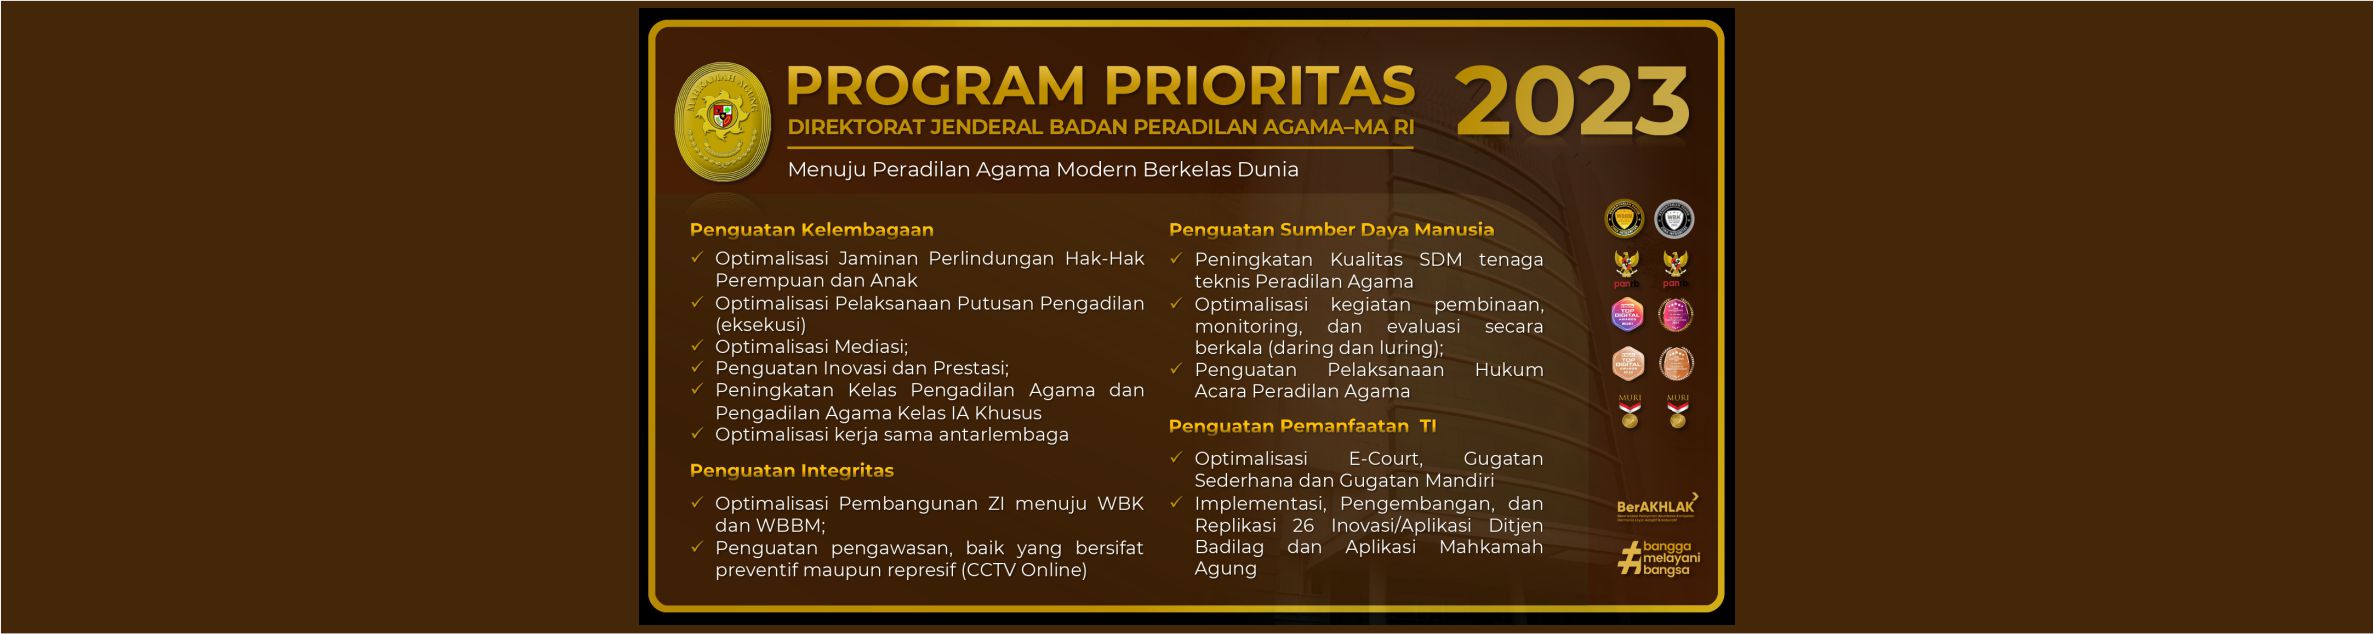 8 program utama